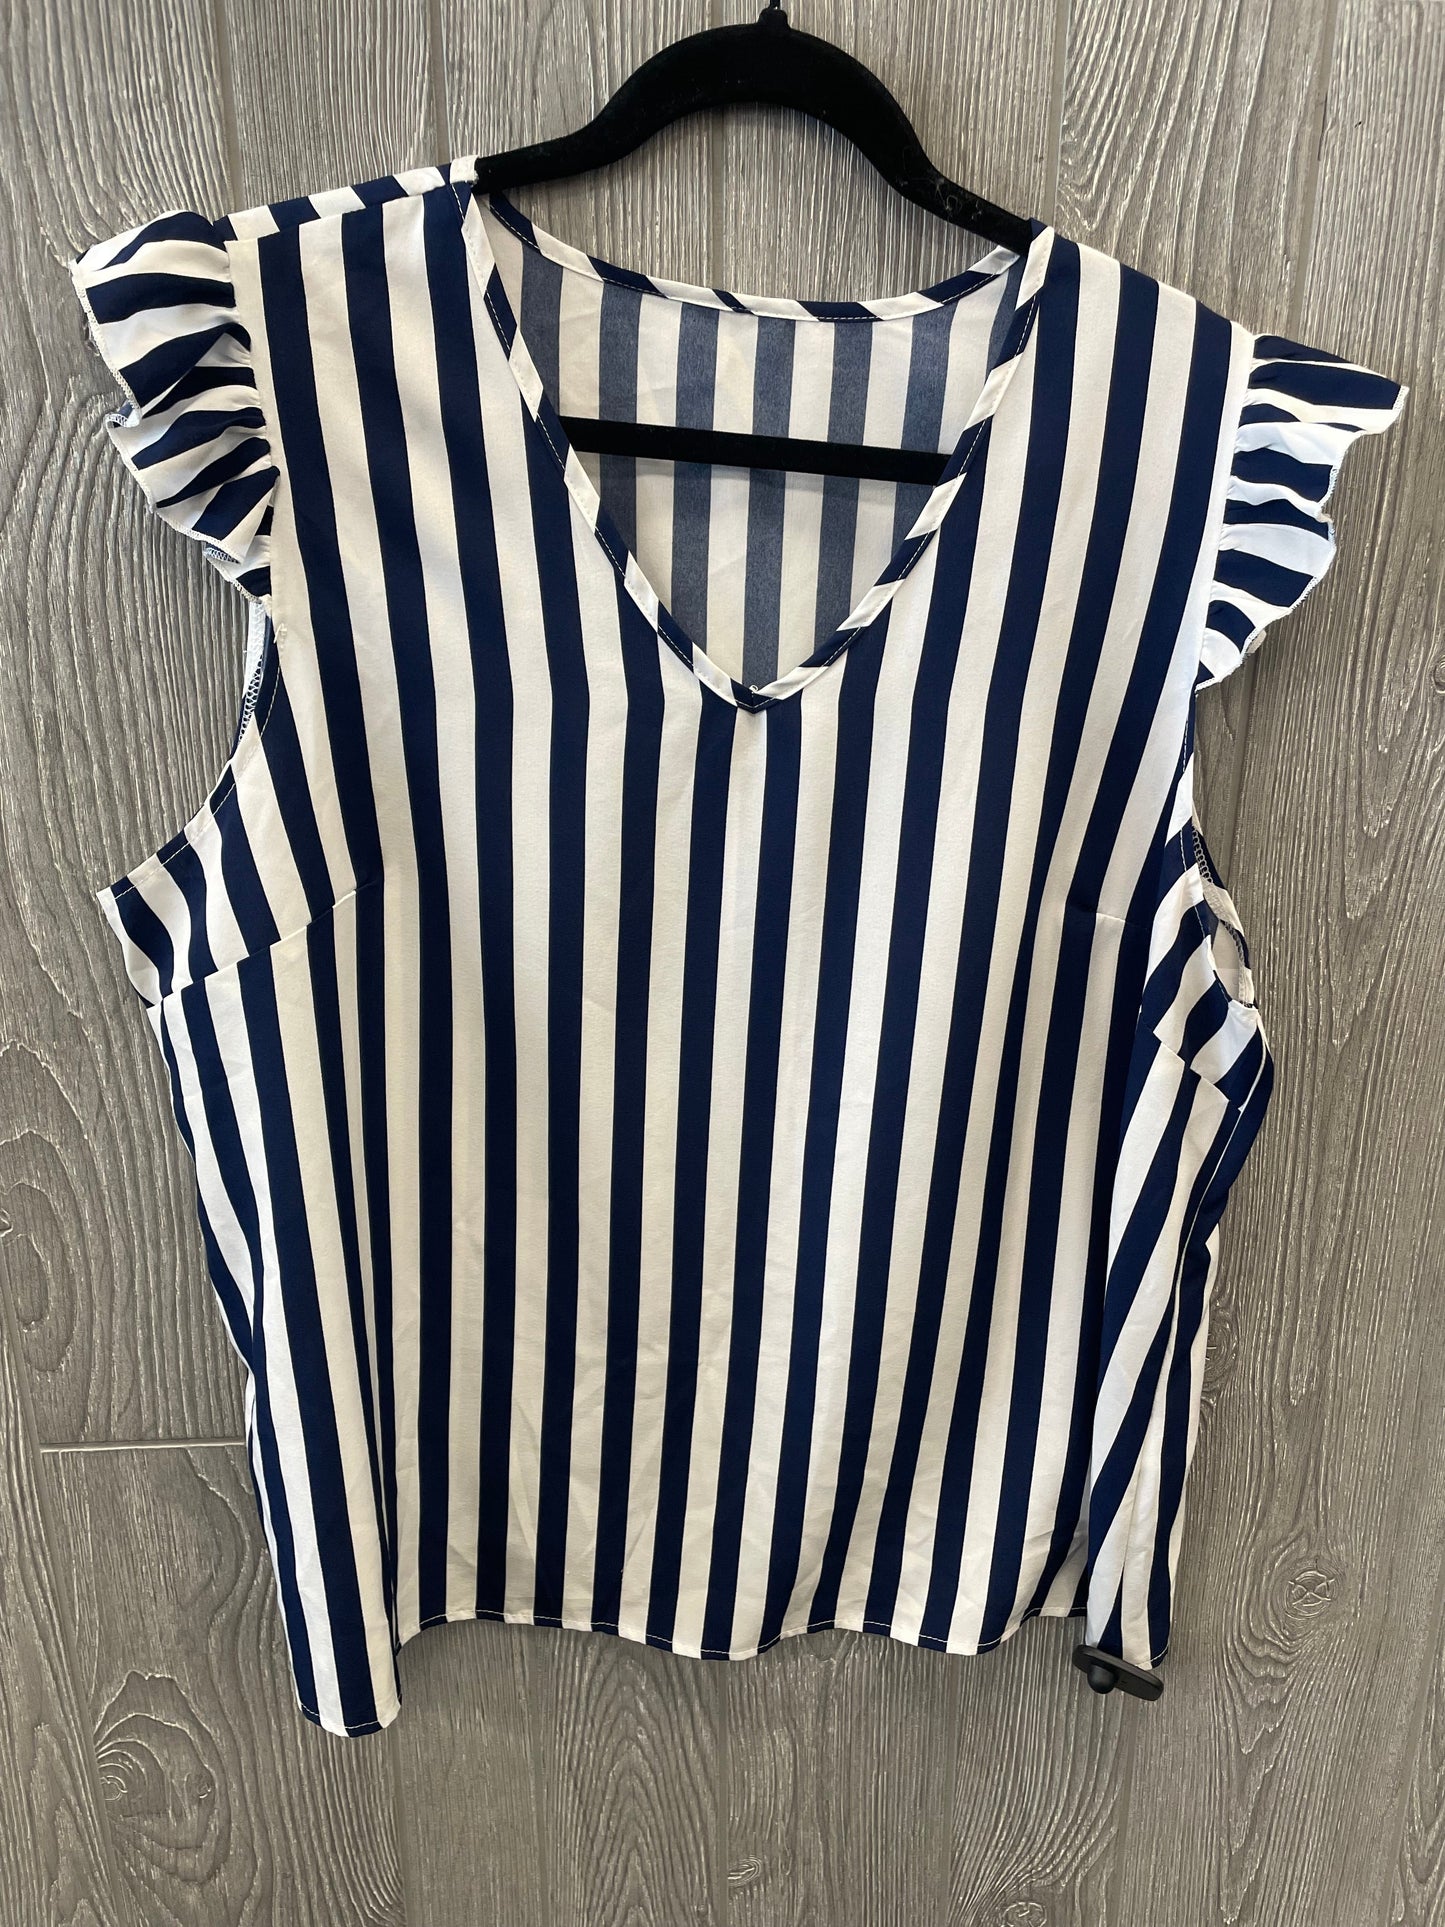 Striped Pattern Top Short Sleeve Shein, Size 2x